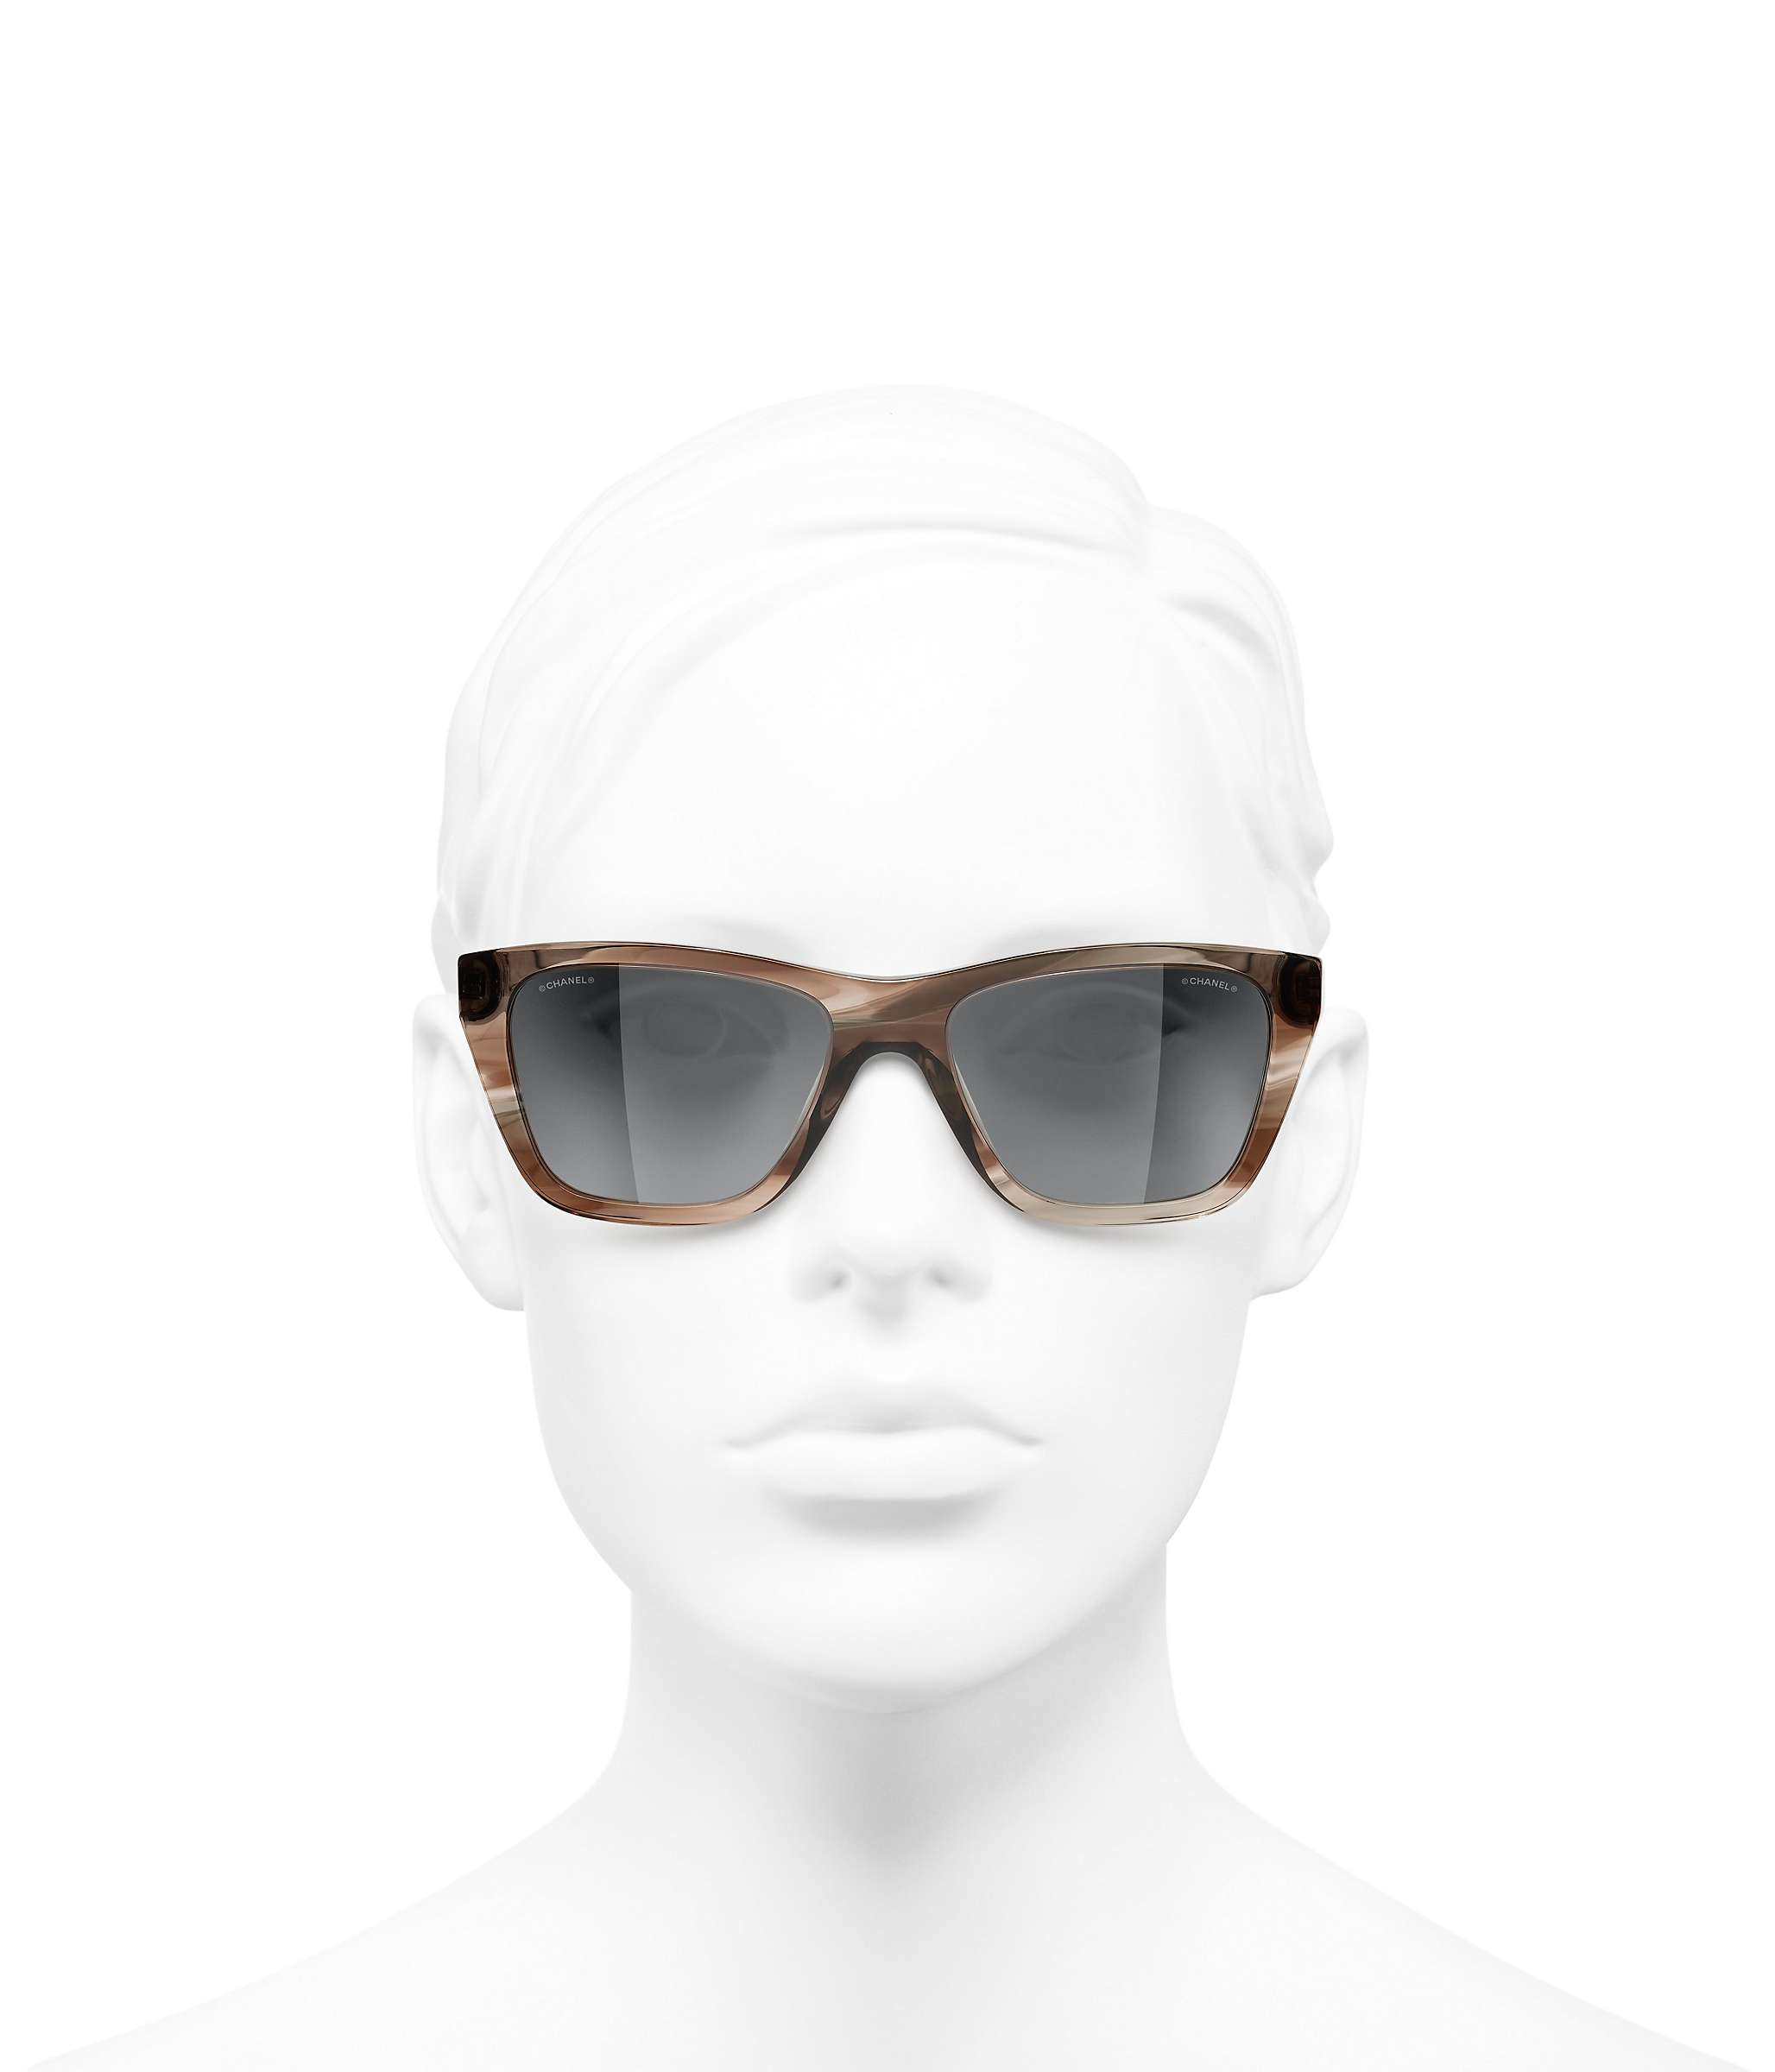 Buy CHANEL Rectangular Sunglasses CH5442 Striped Brown/Light Grey Online at johnlewis.com